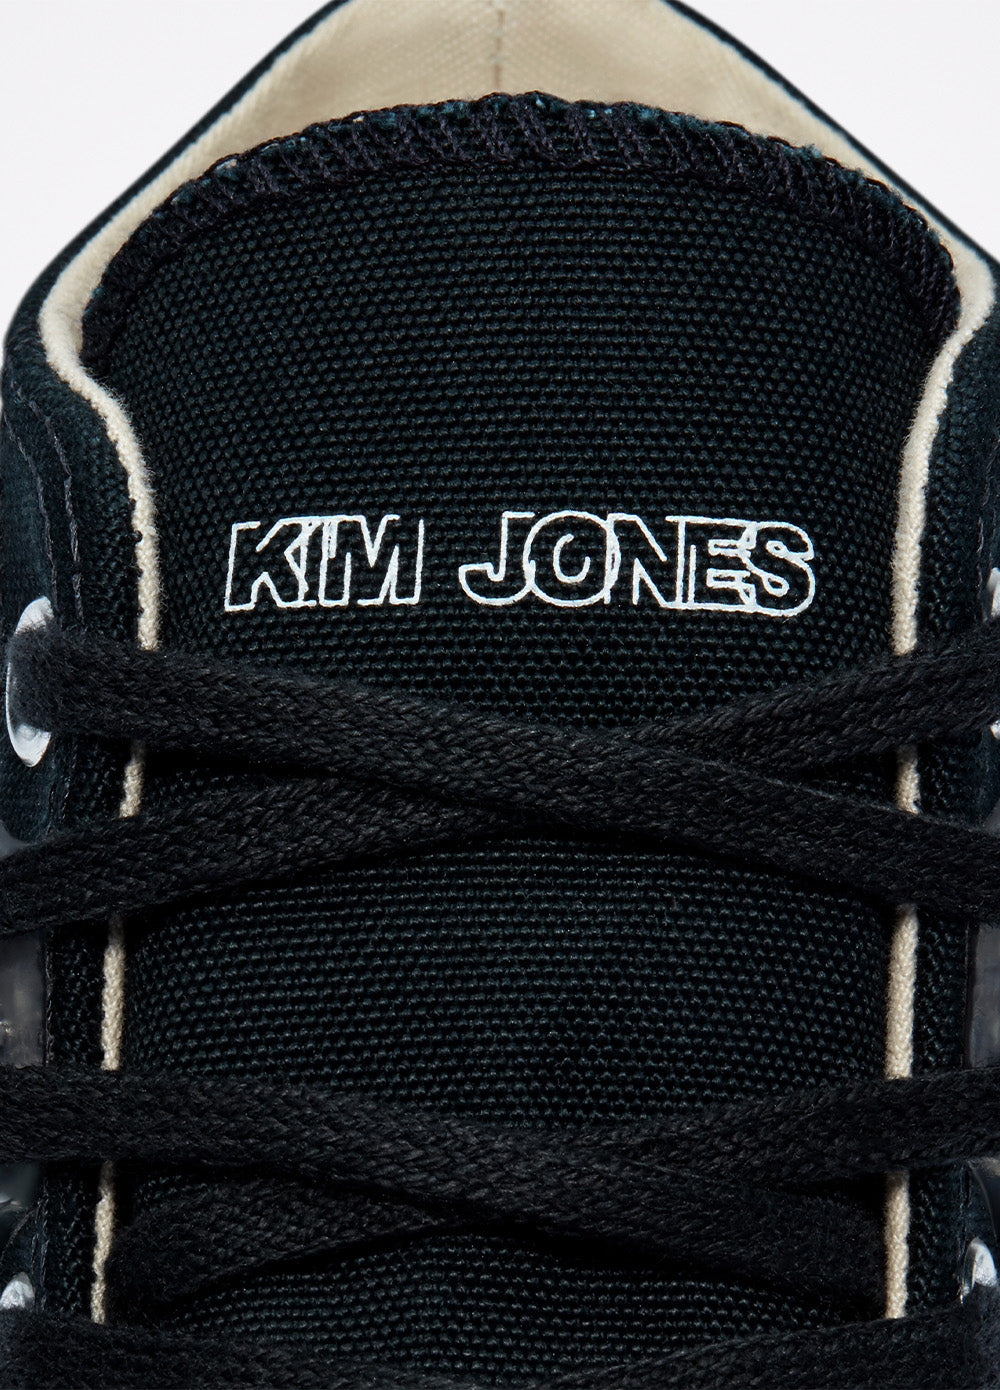 x Kim Jones Chuck 70 Sneakers